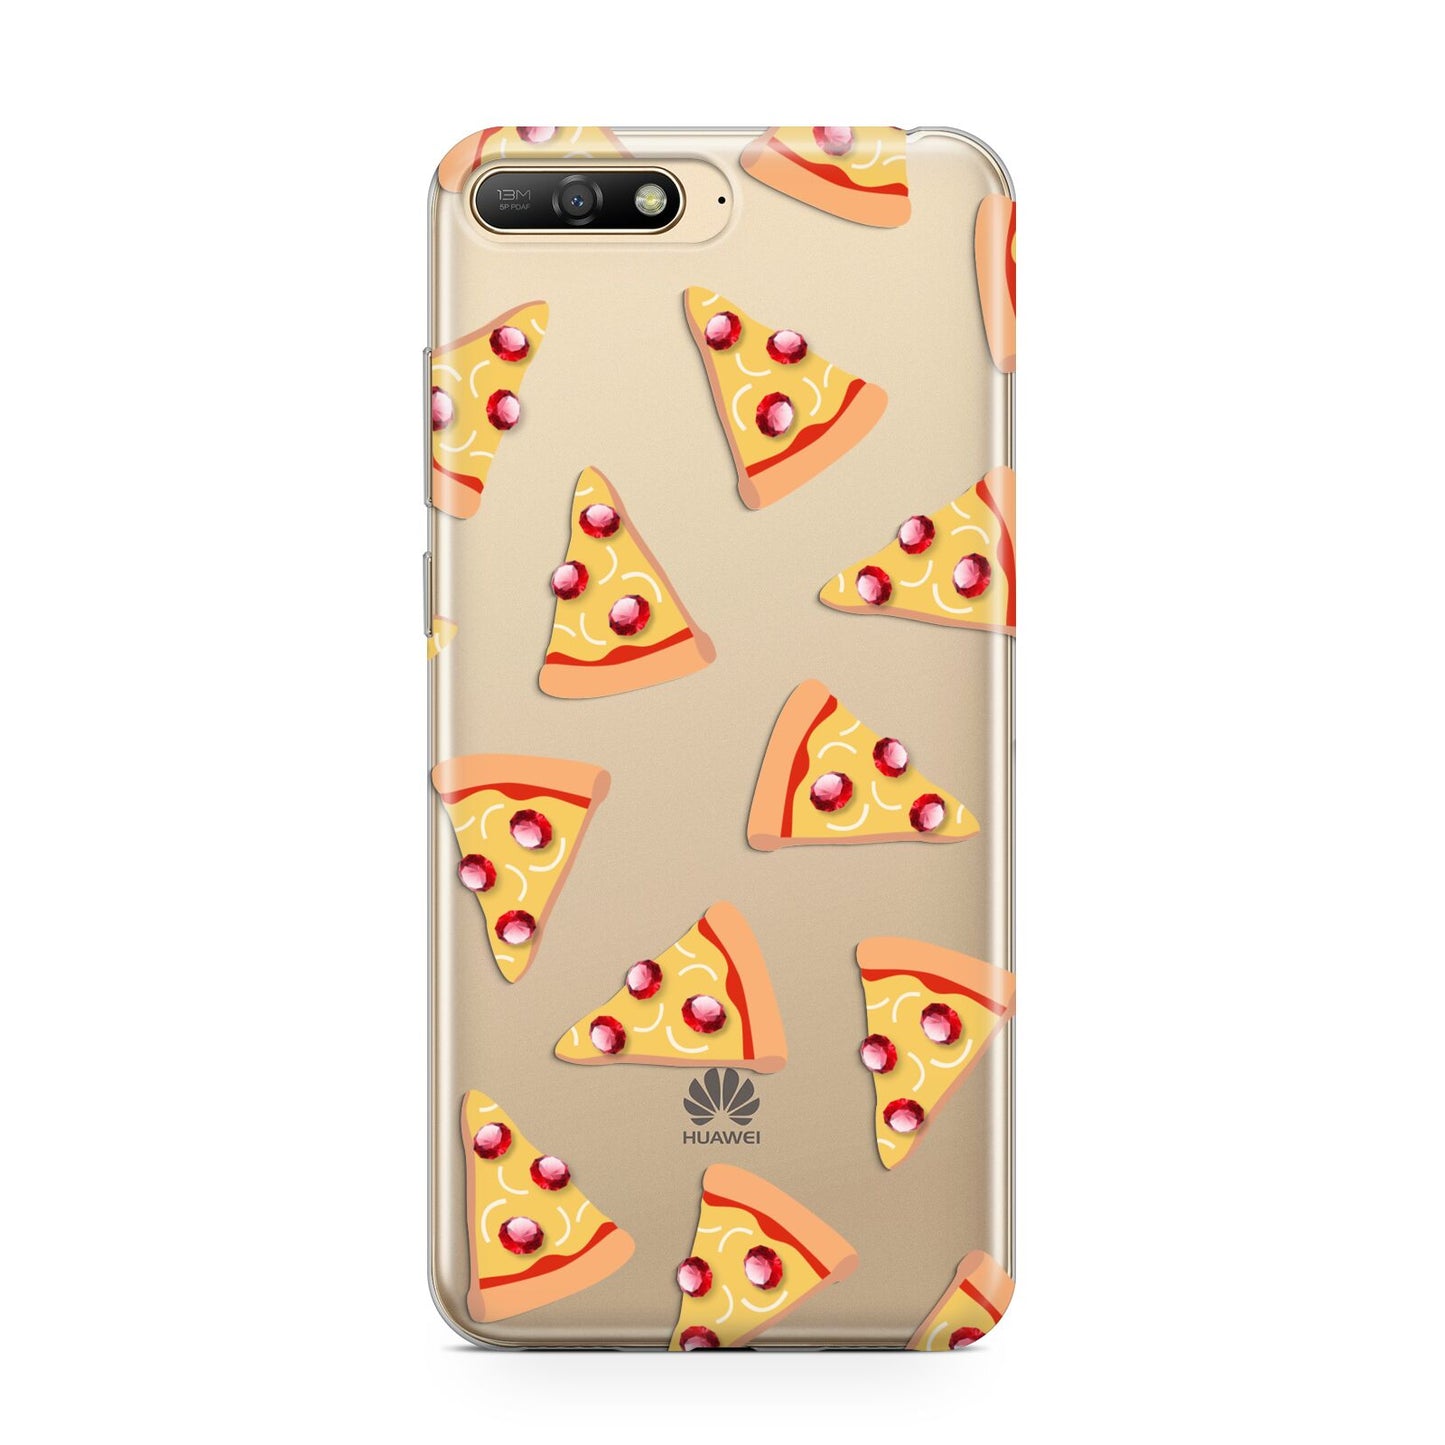 Rubies on Cartoon Pizza Slices Huawei Y6 2018